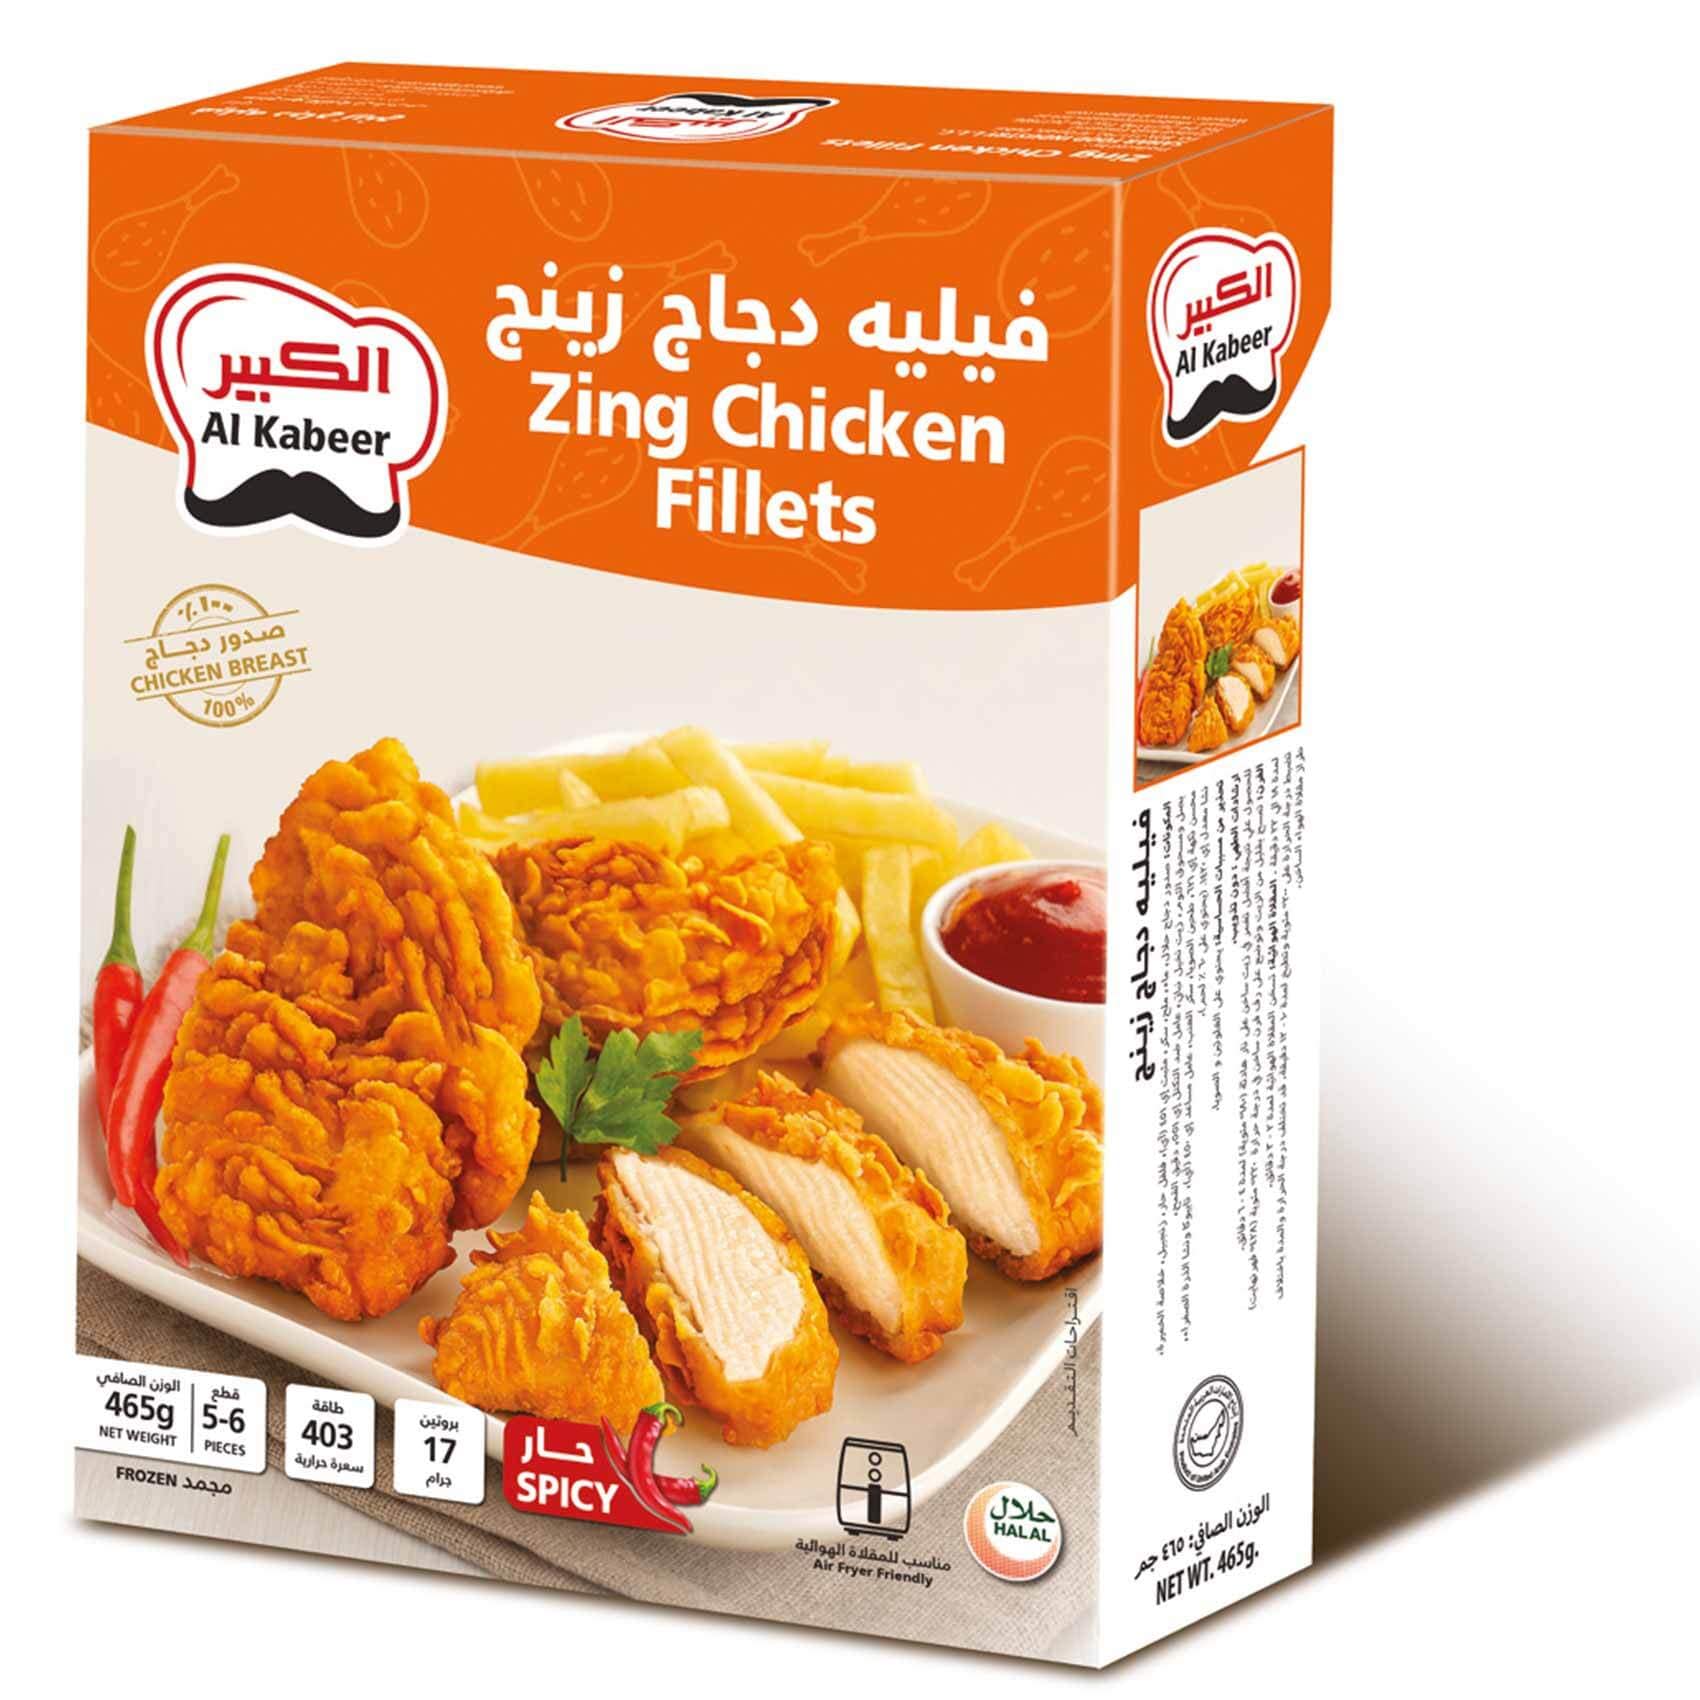 Buy Al Kabeer Zing Chicken Fillets 465g Online - Shop Frozen Food